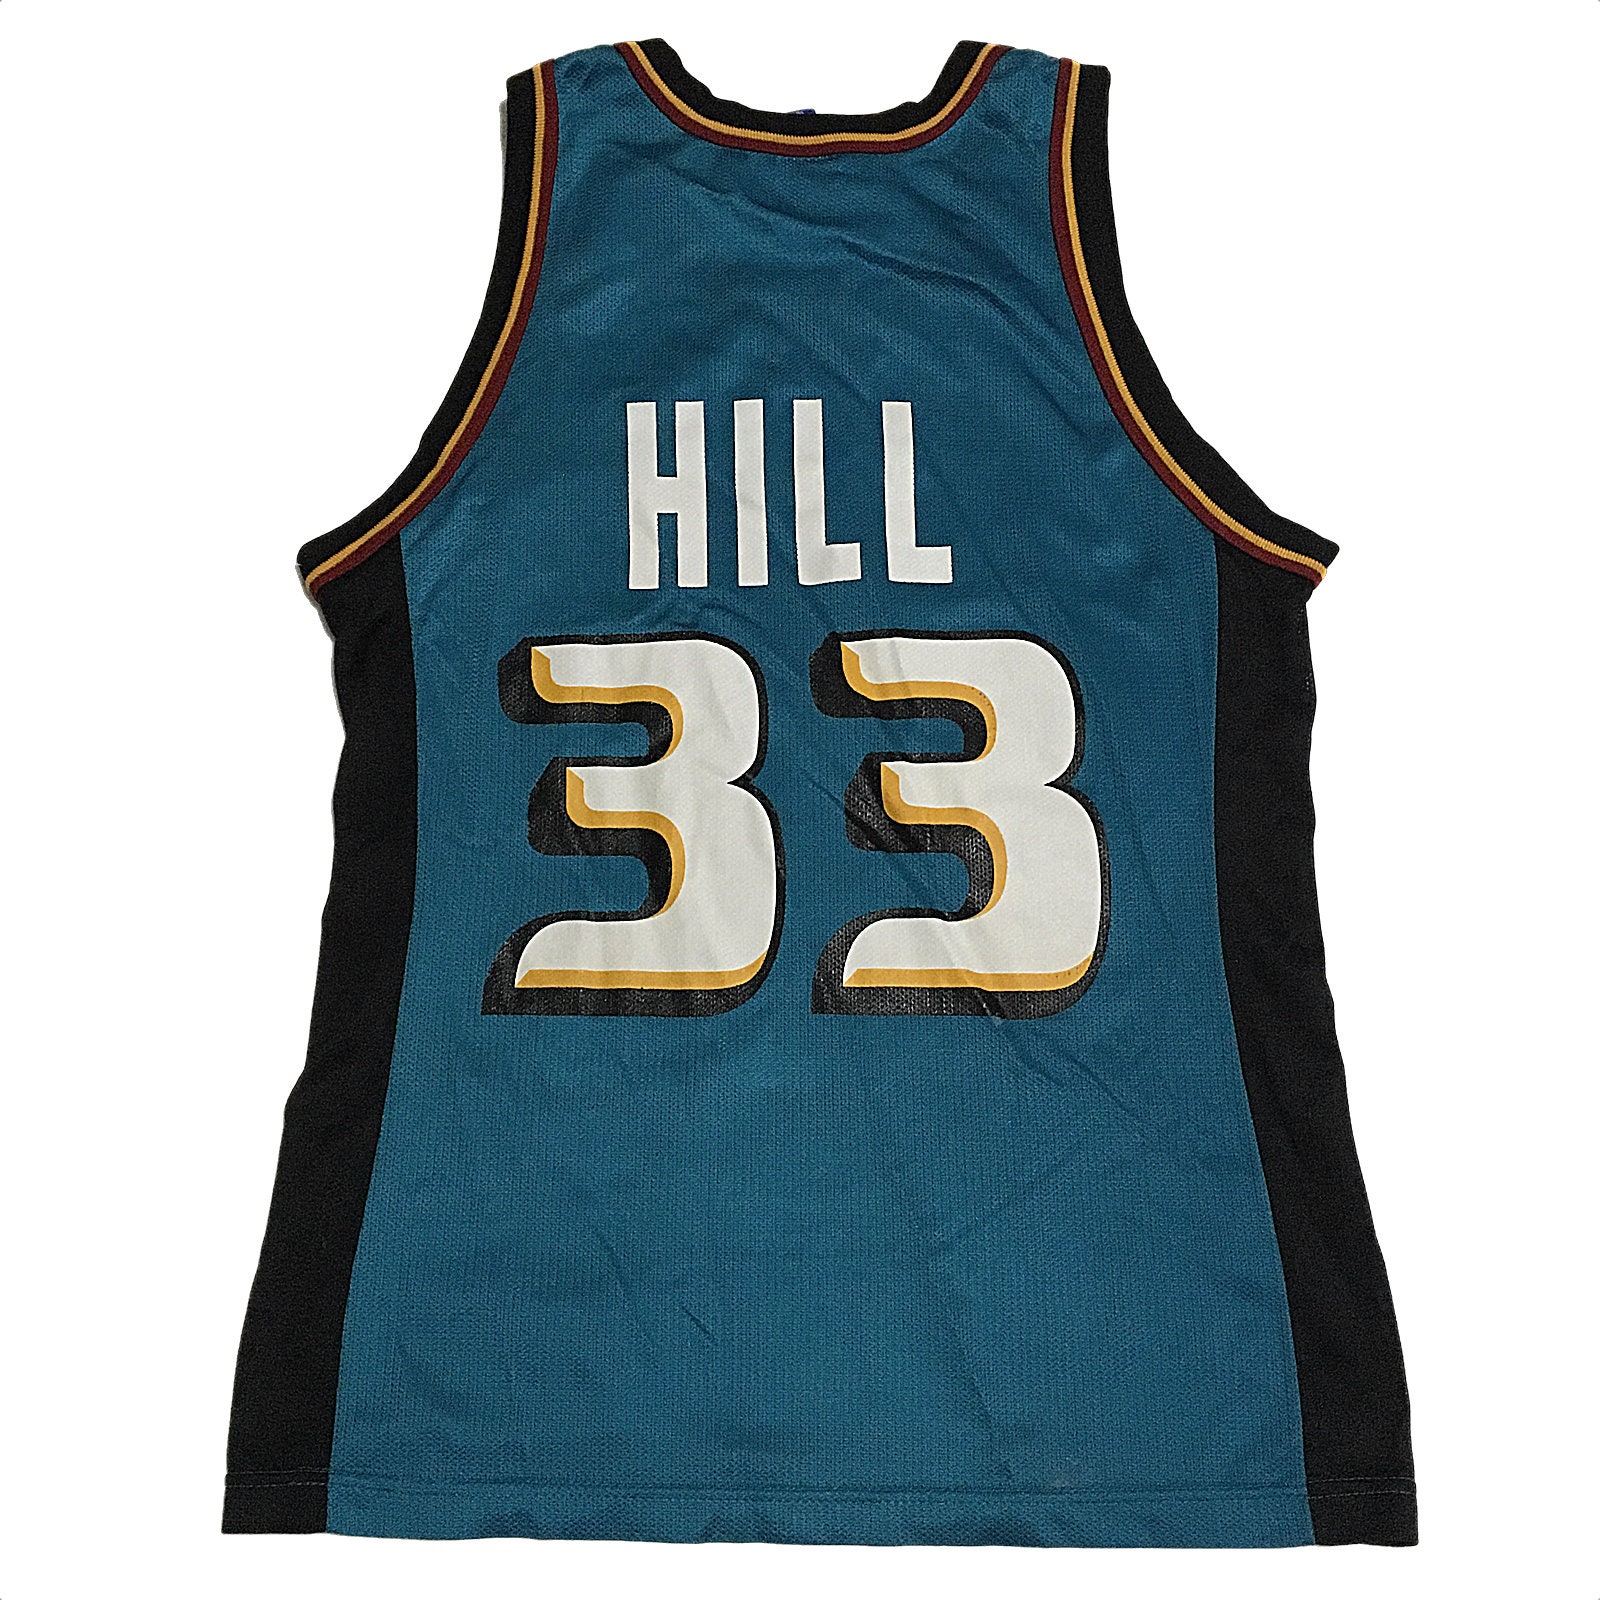 Grant Hill Pistons Jersey size 44  Clothes design, Fashion, Plus